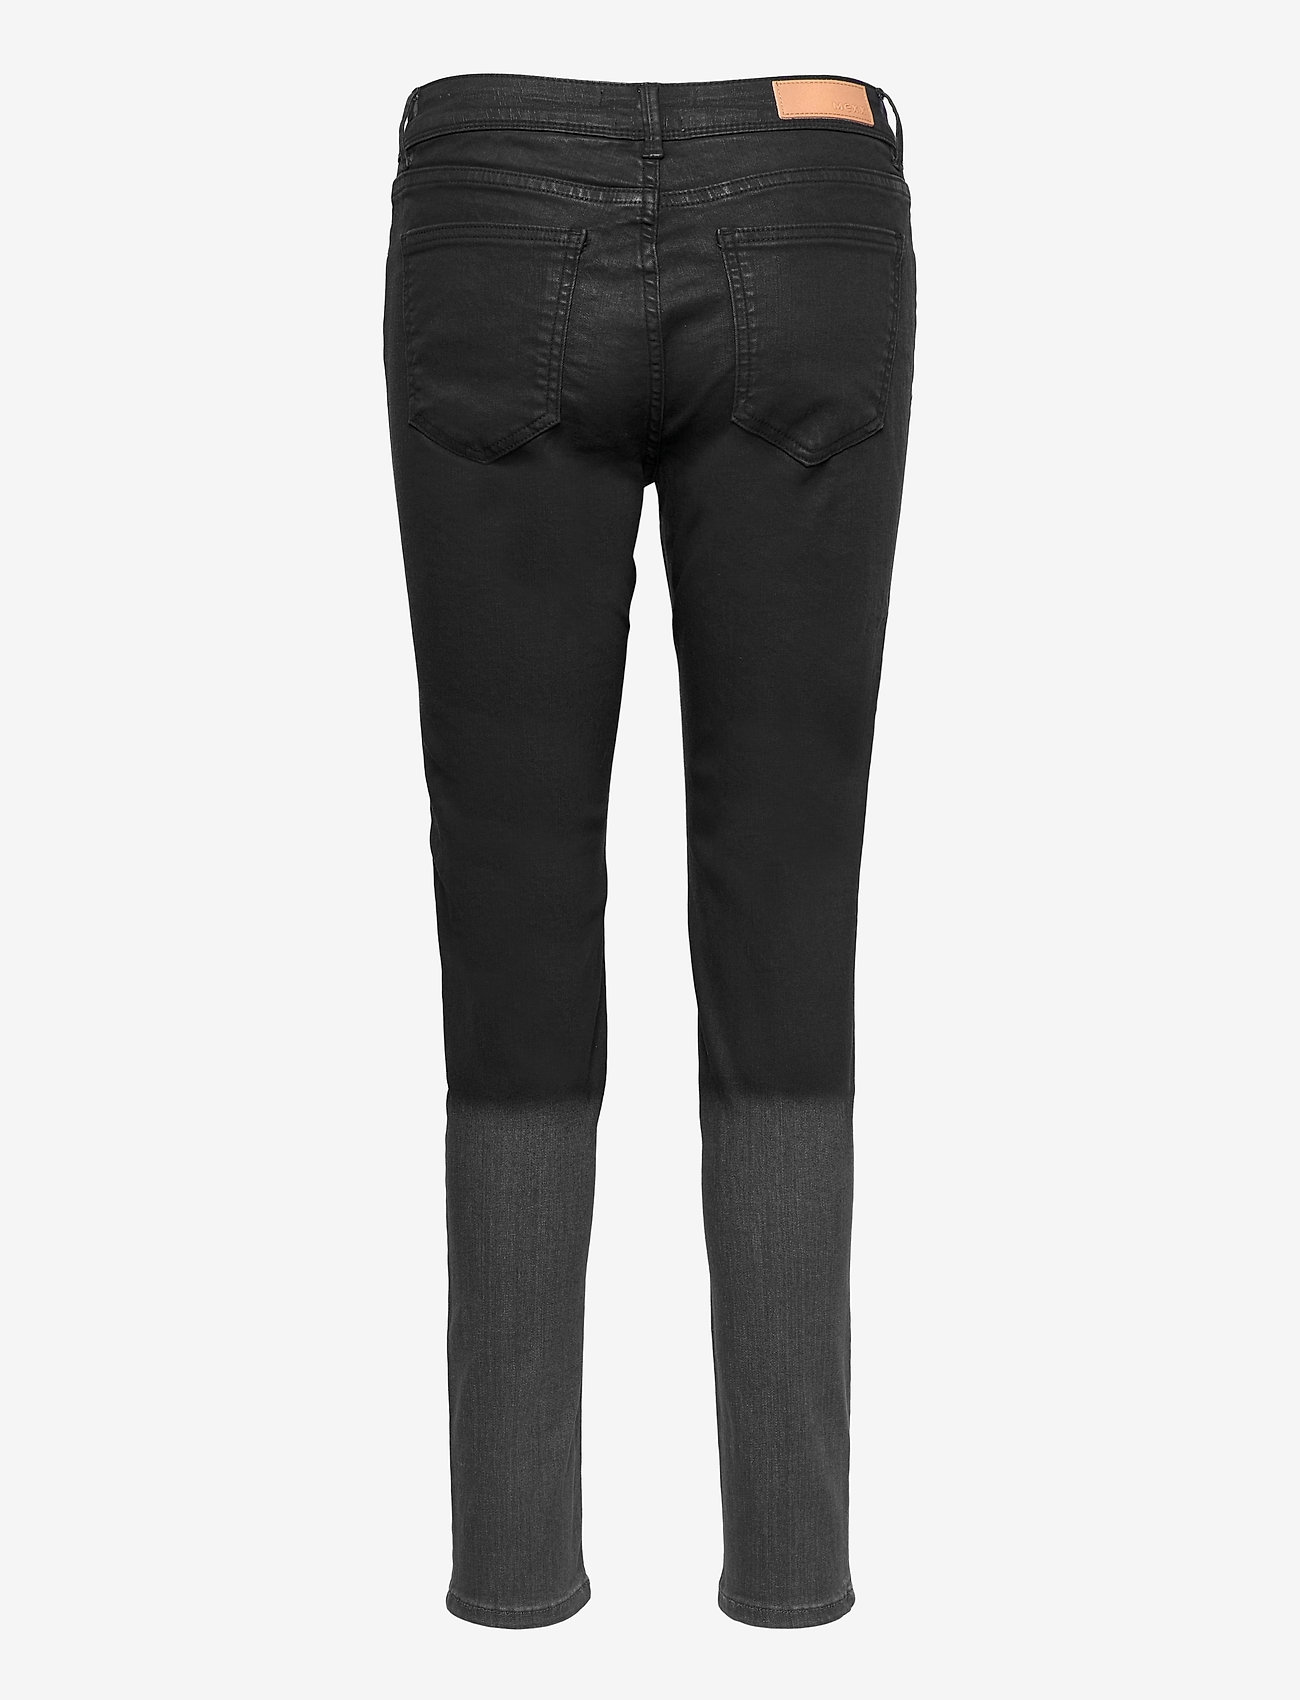 Mexx - Jeans - slim jeans - black - 1